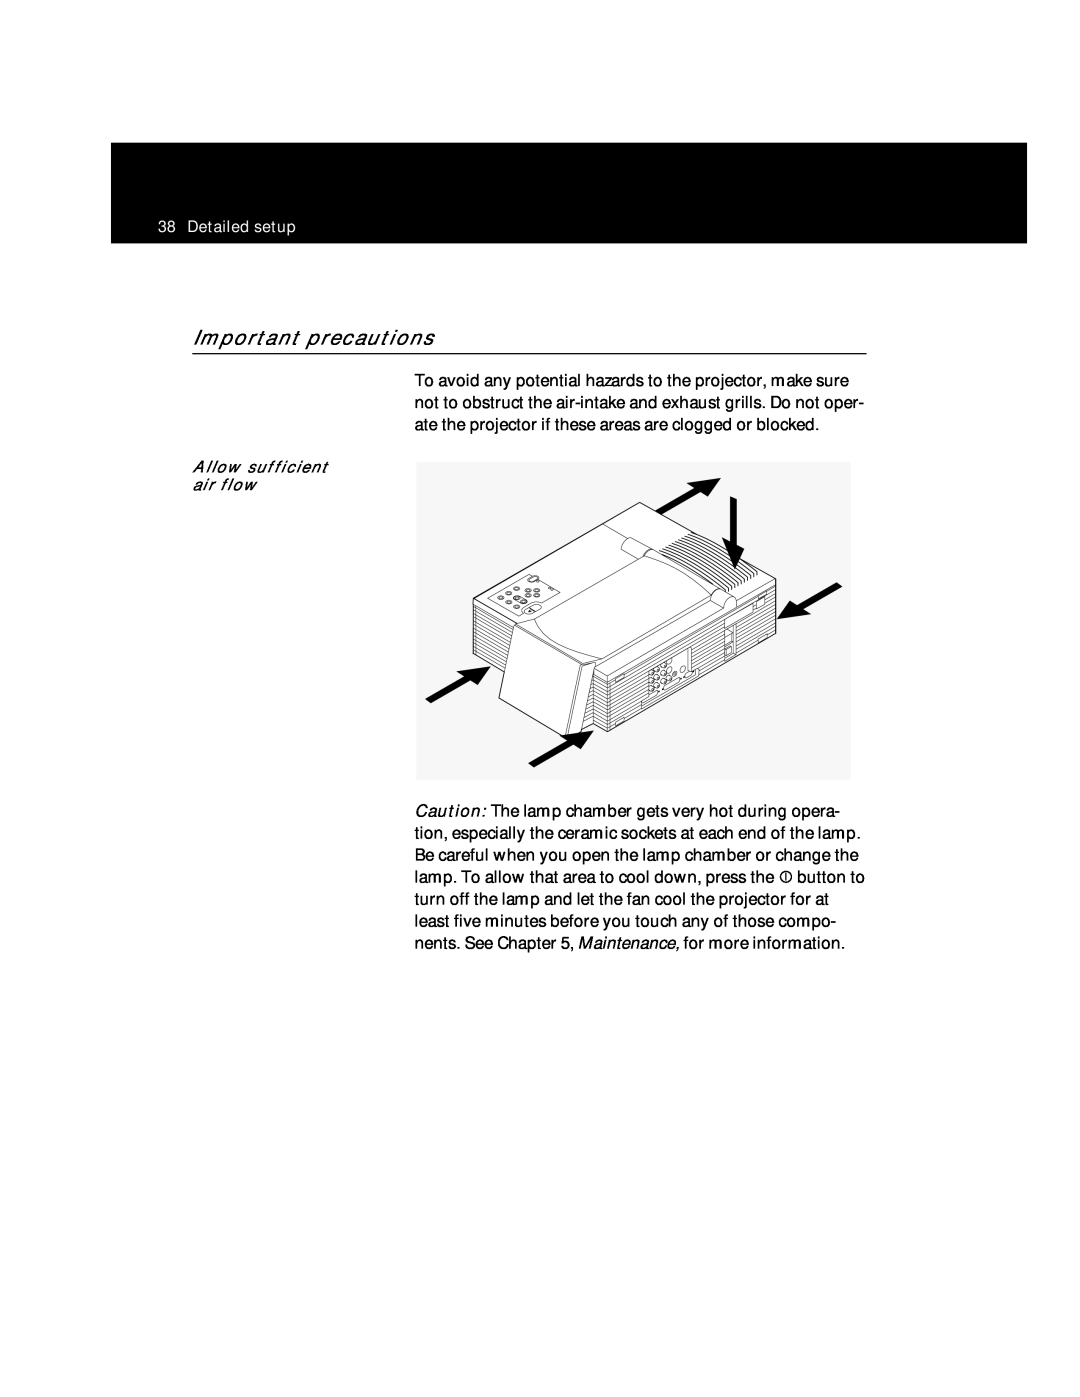 Polaroid Polaview 305 manual Important precautions, Detailed setup, Allow sufficient air flow 